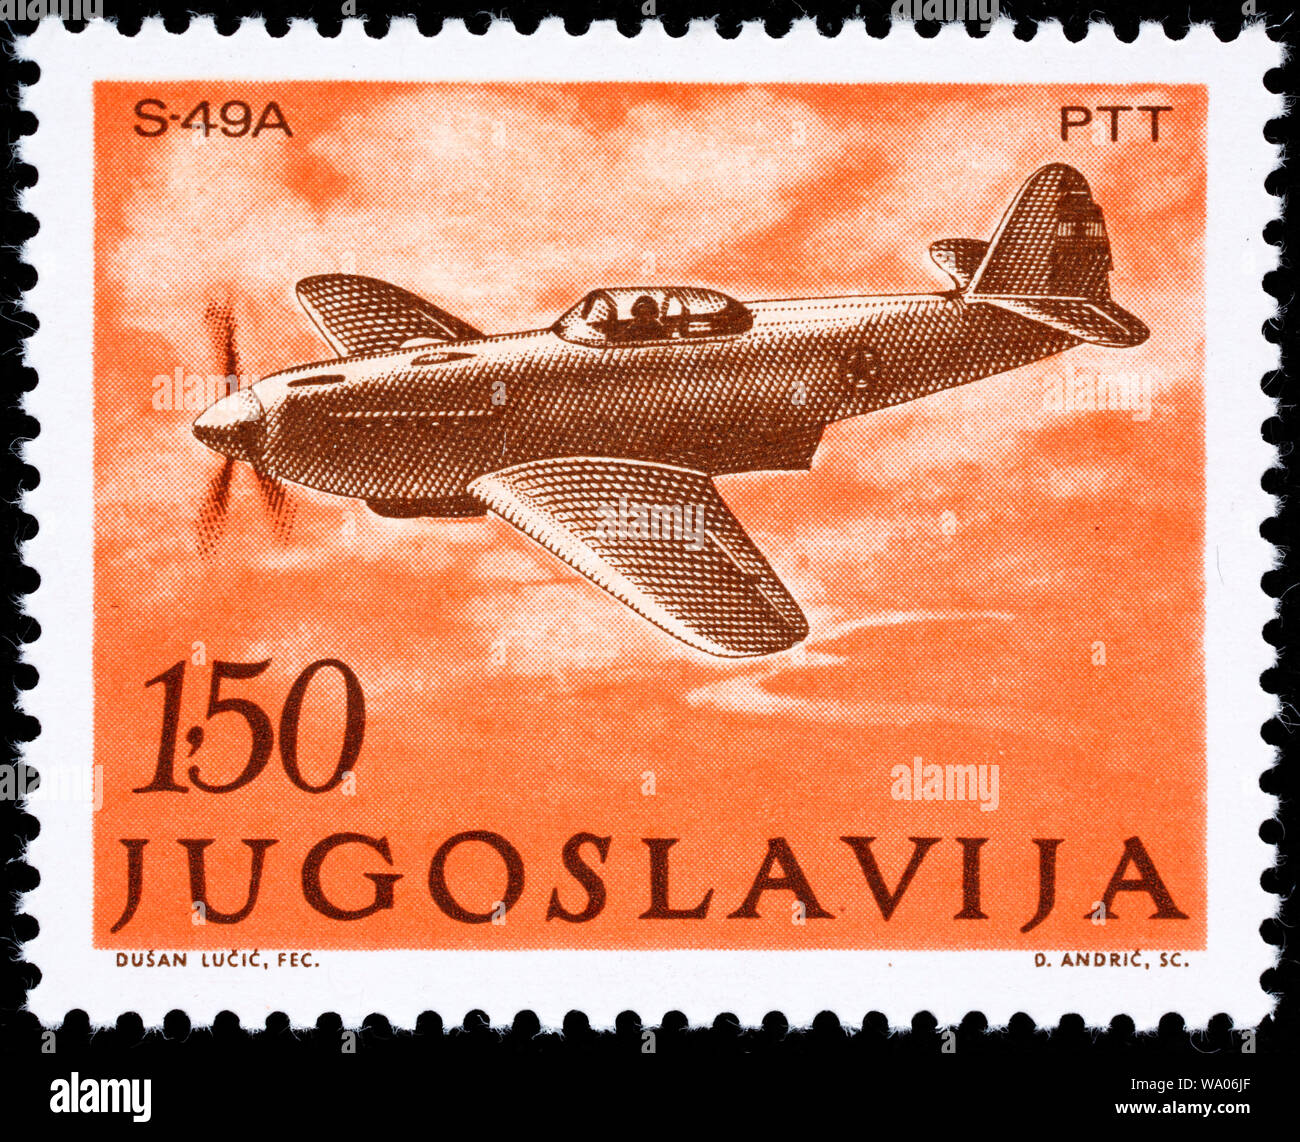 Fighterplane S-49 A (1949), postage stamp, Yugoslavia, 1978 Stock Photo